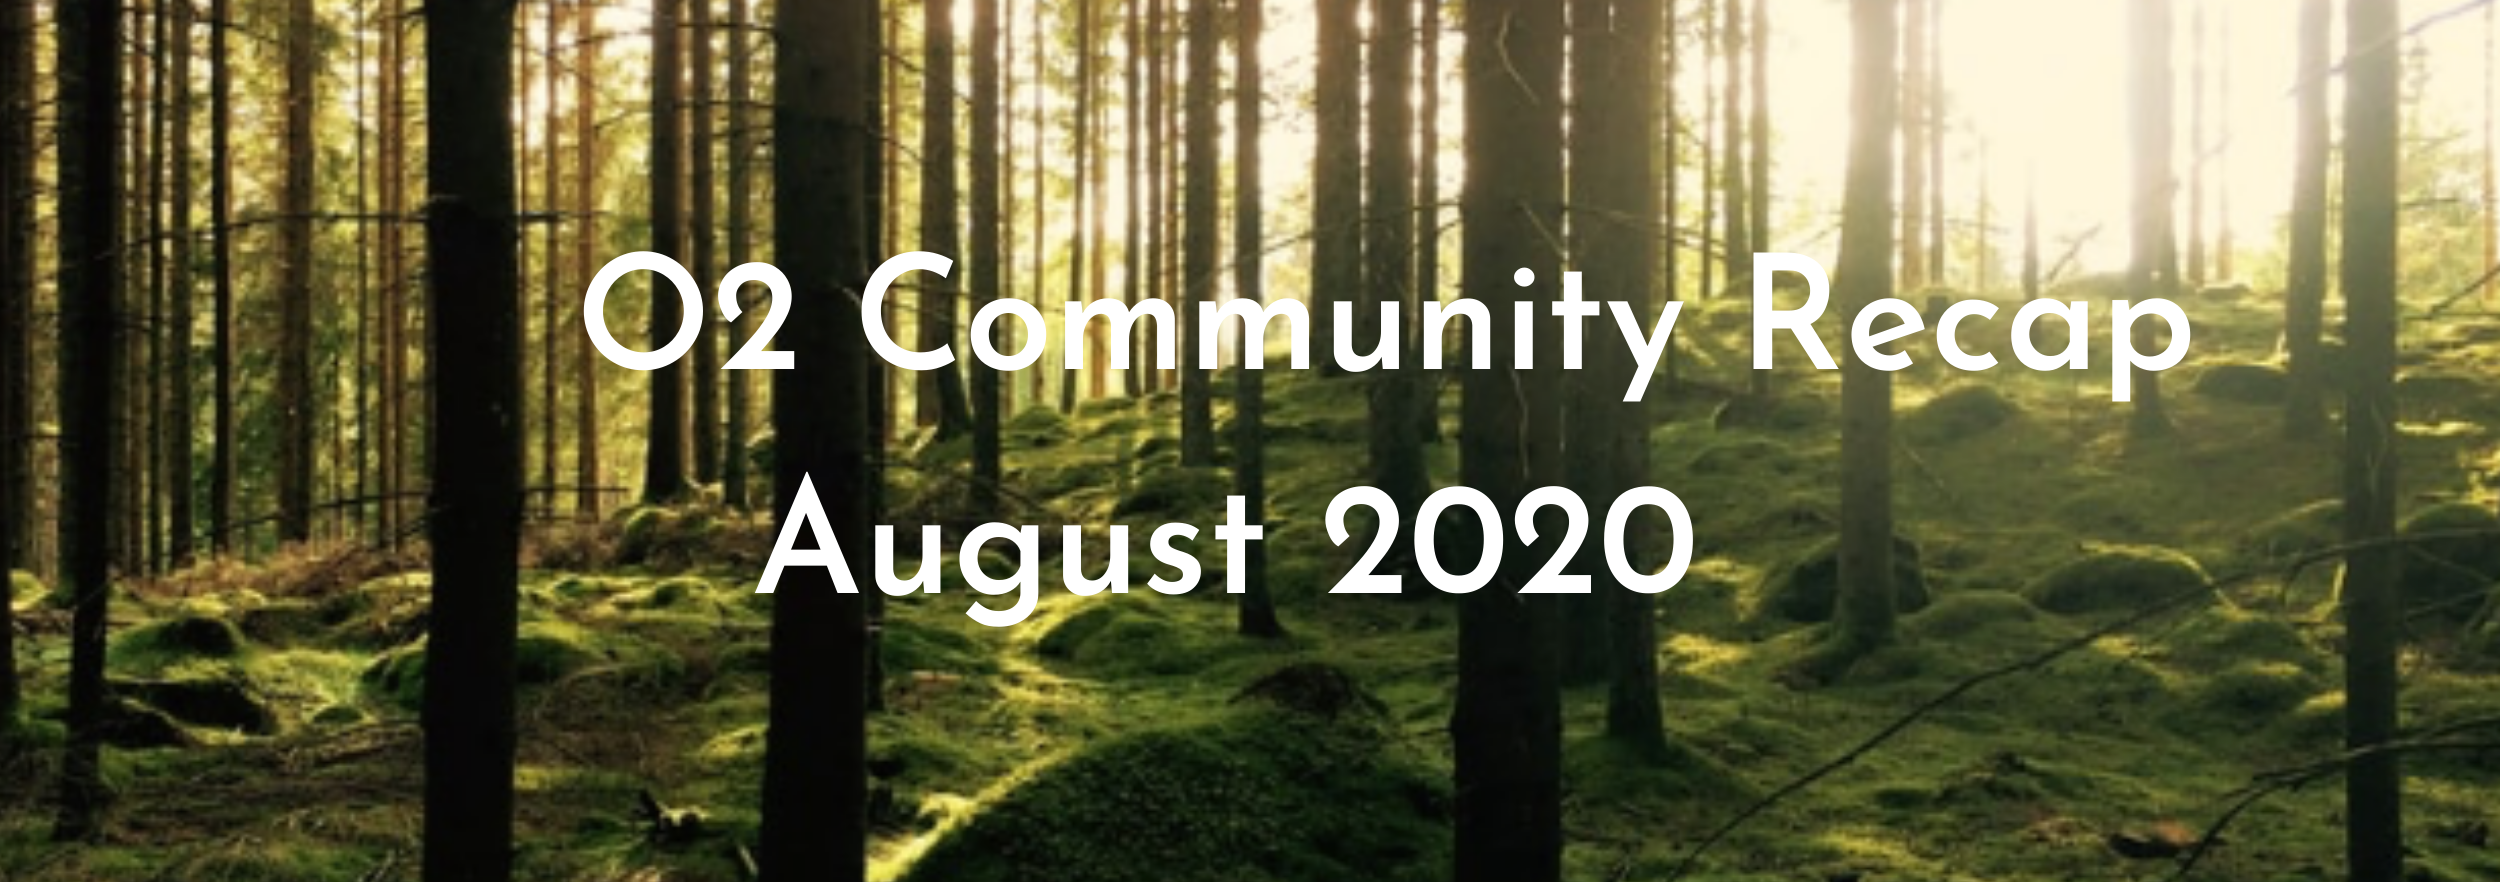 O2 Community recap August 2020.png